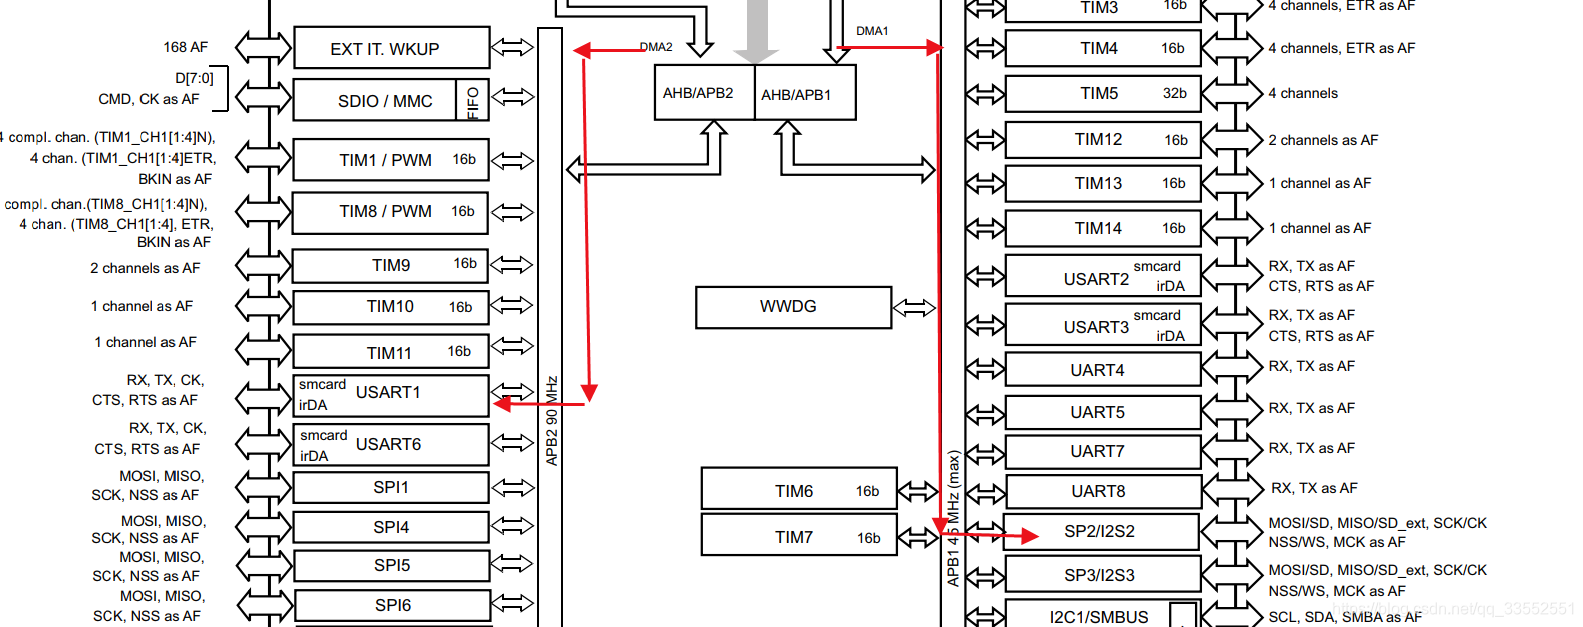 从图中标记看DMA2 DMA1分别访问USART1 SPI2 并无冲突